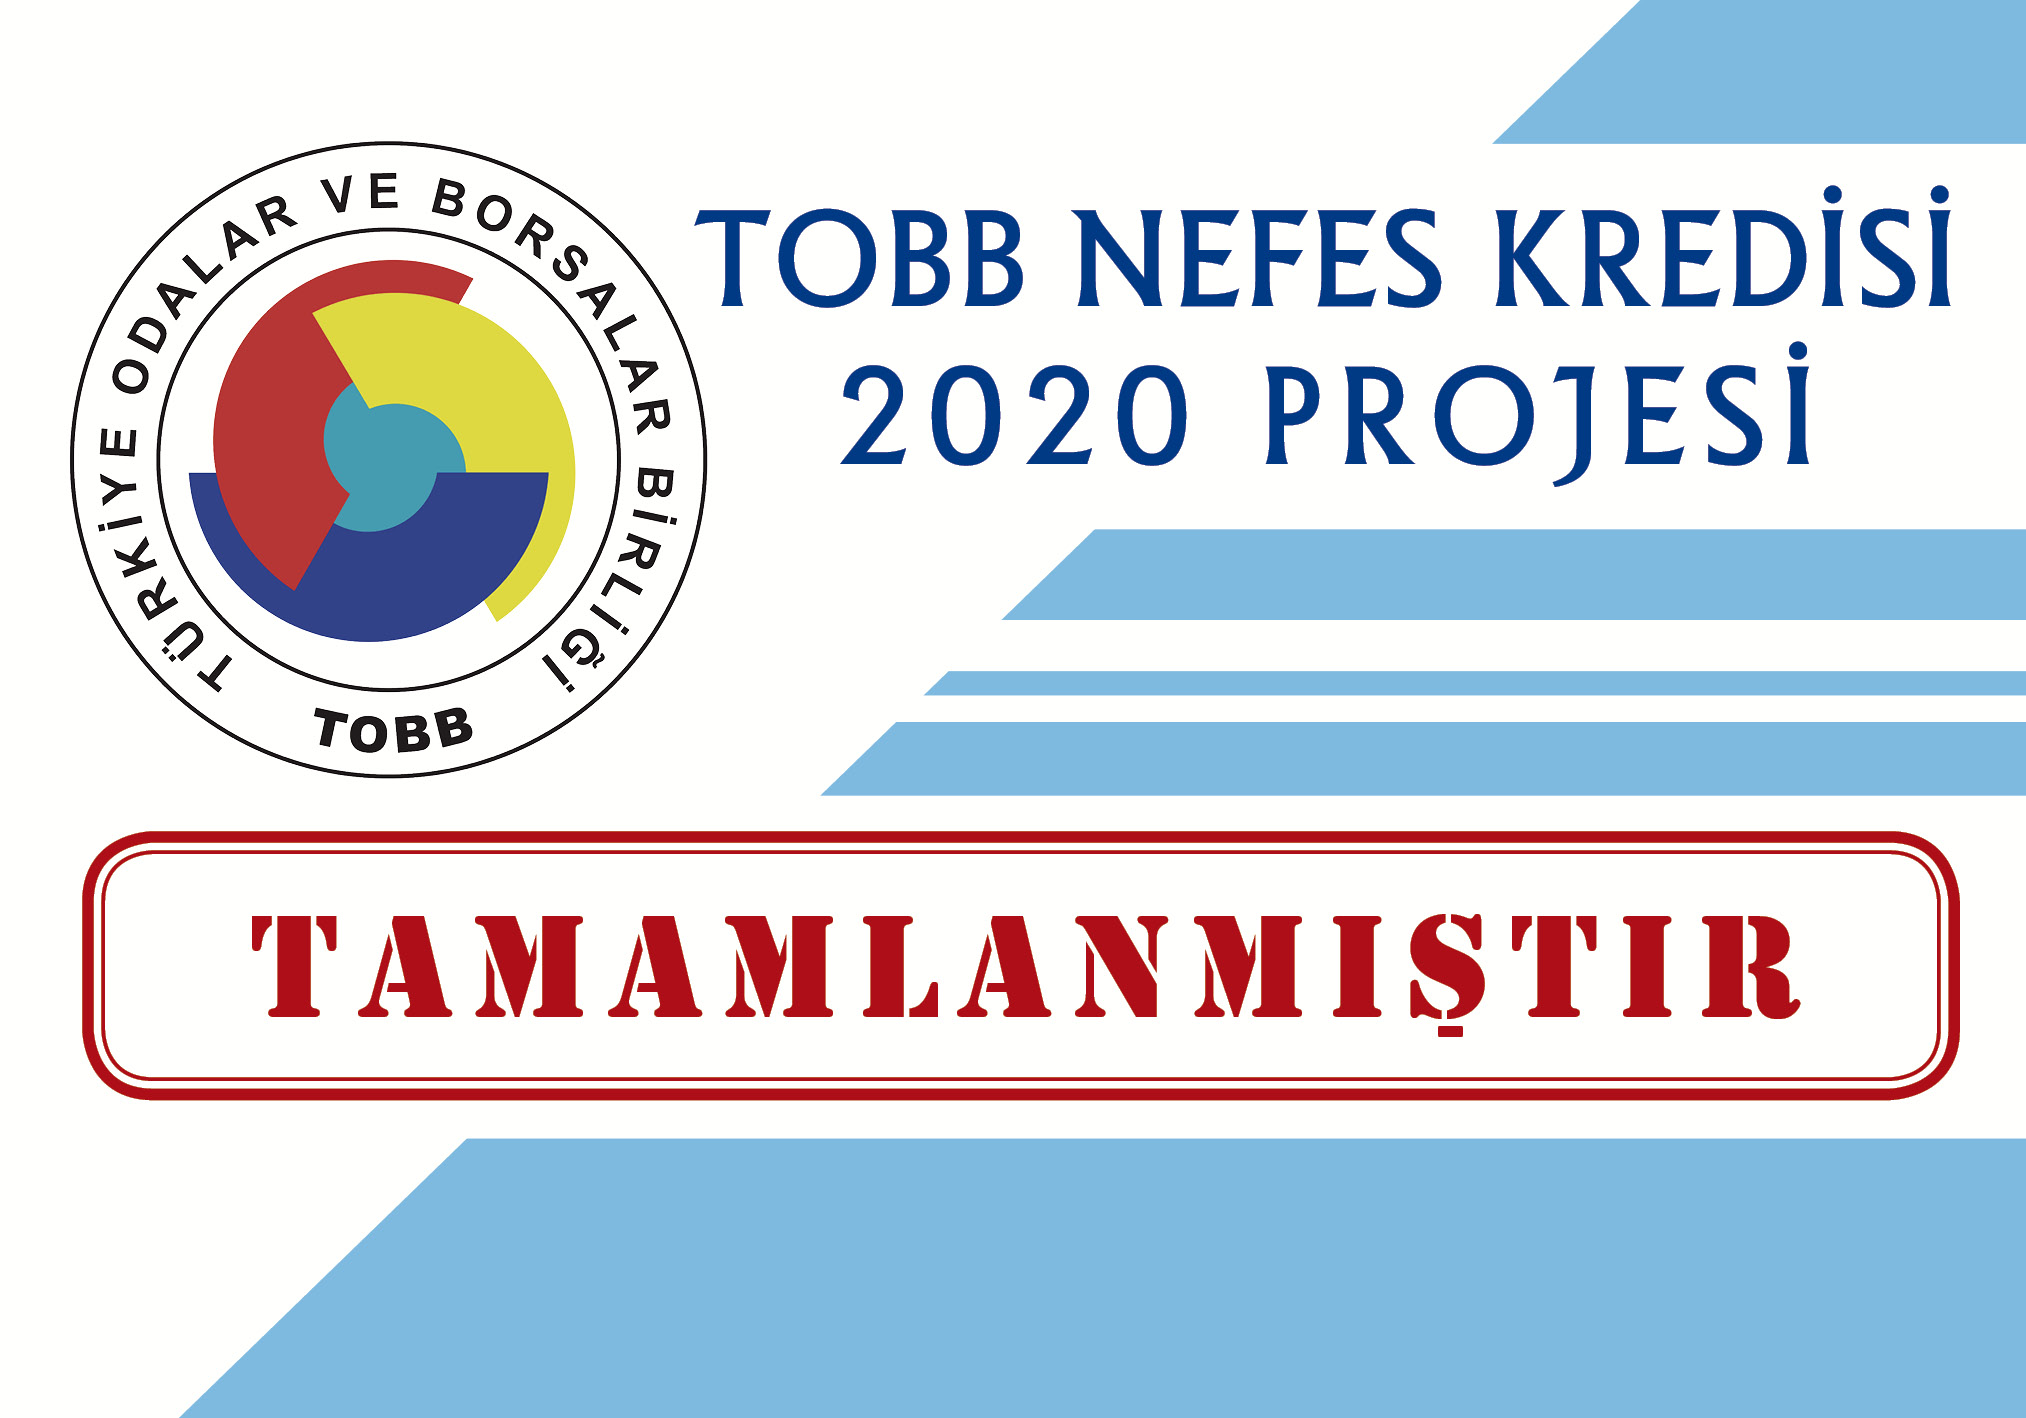 TOBB NEFES KREDS 2020 Projesi Tamamlanmtr.